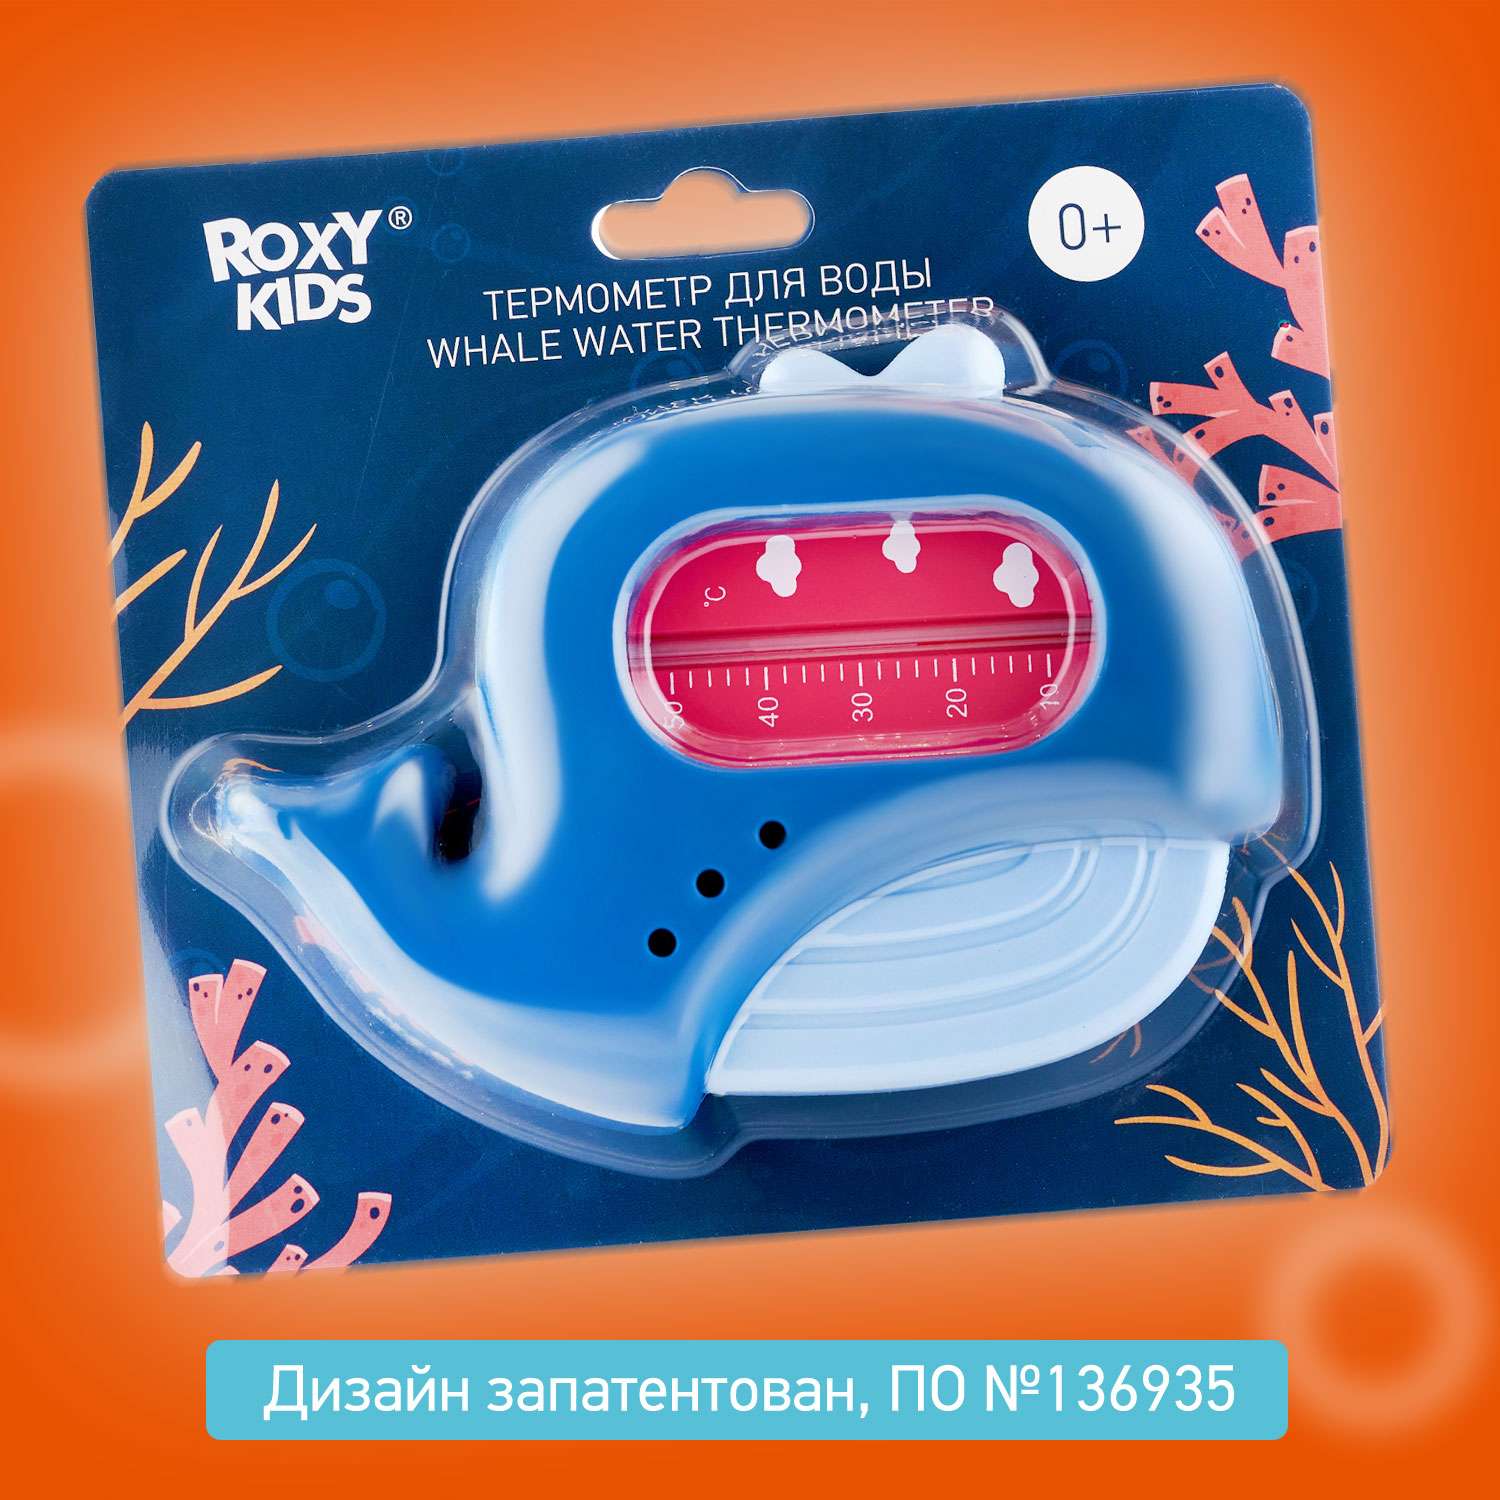 Термометр детский для воды ROXY-KIDS Кит для купания цвет синий - фото 7